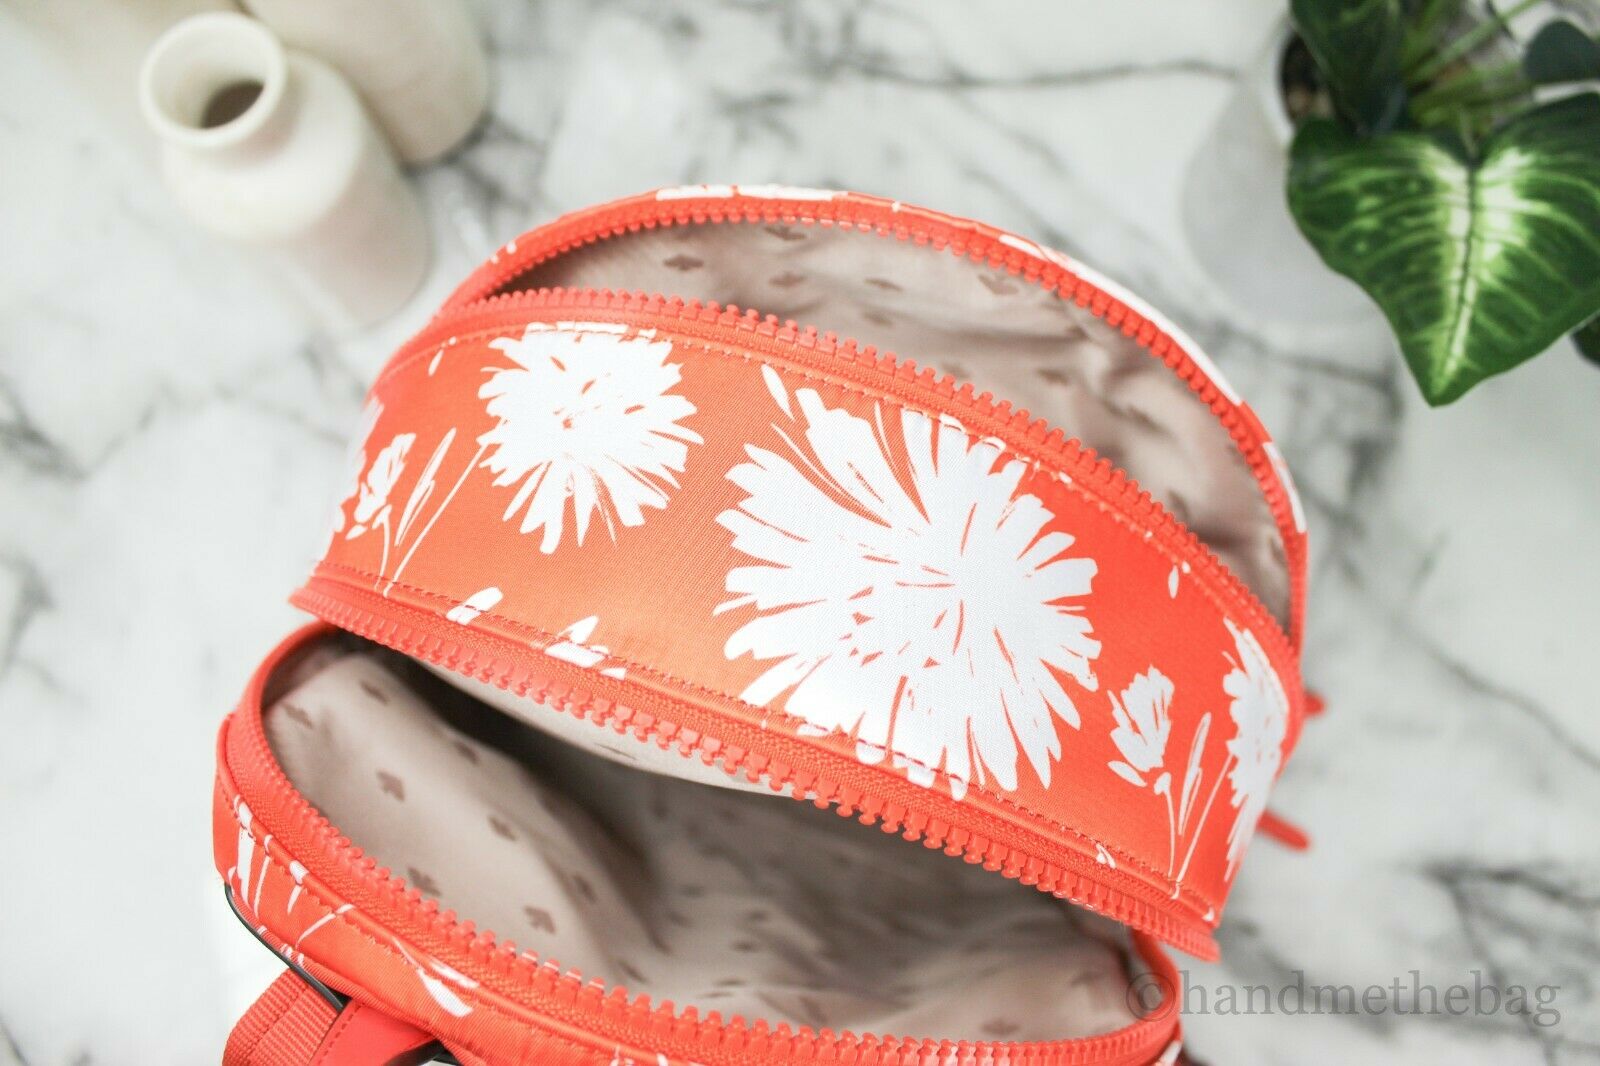 Kate Spade Karissa Wild Bloom Bright Orange Multi Nylon Medium Backpack BookBag